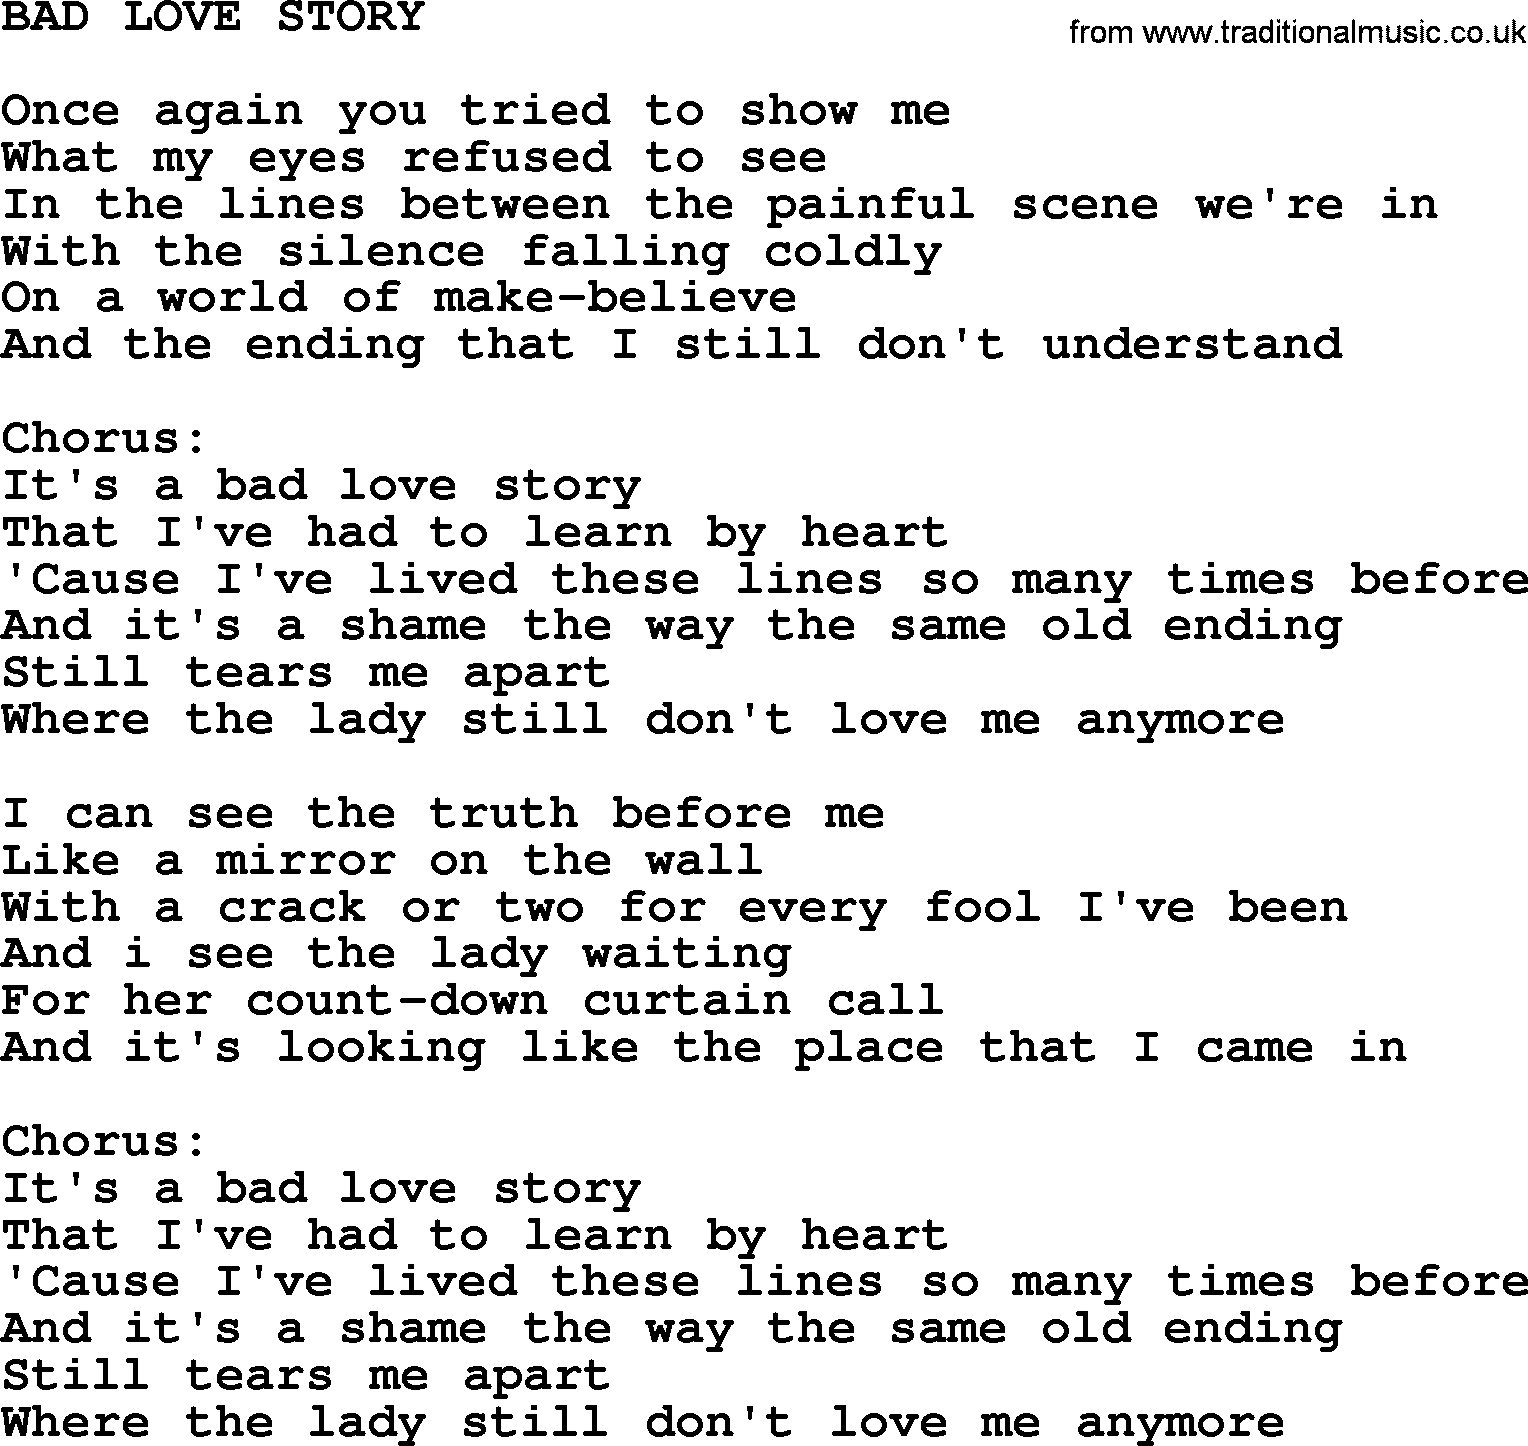 Kris Kristofferson song: Bad Love Story lyrics